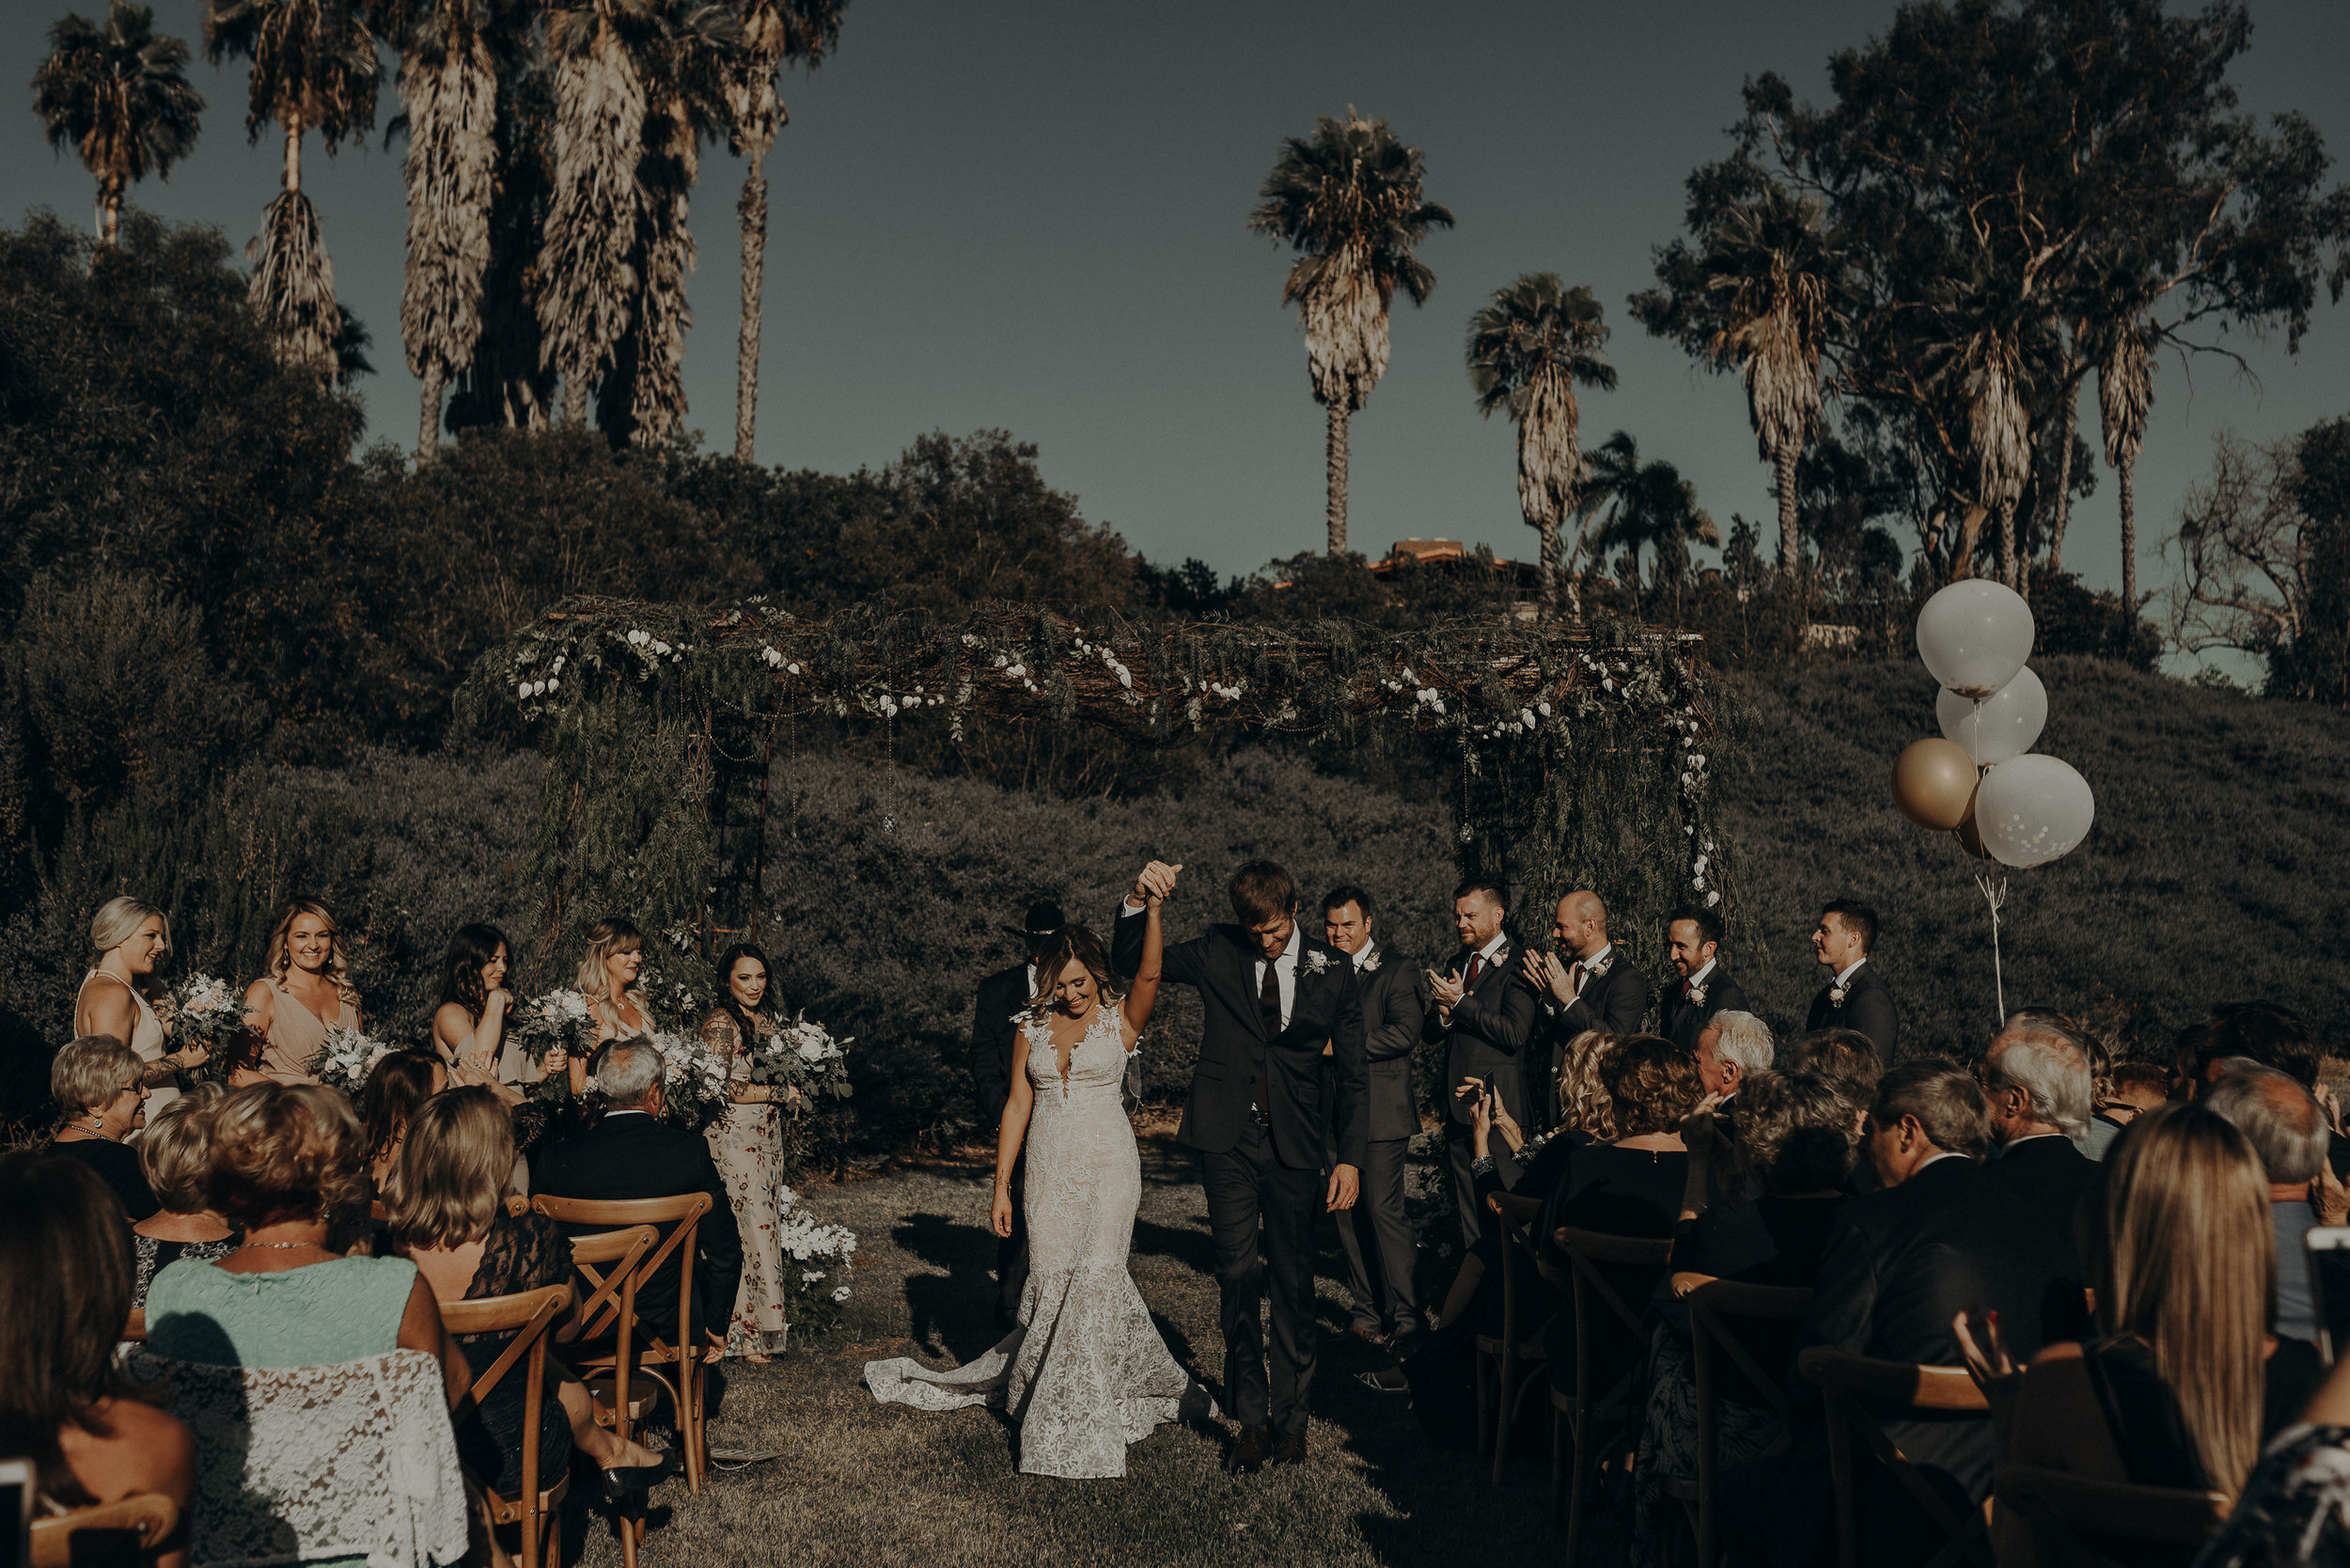 Isaiah + Taylor Photography - Los Angeles Wedding Photographer - Open Air Resort Wedding-64.jpg